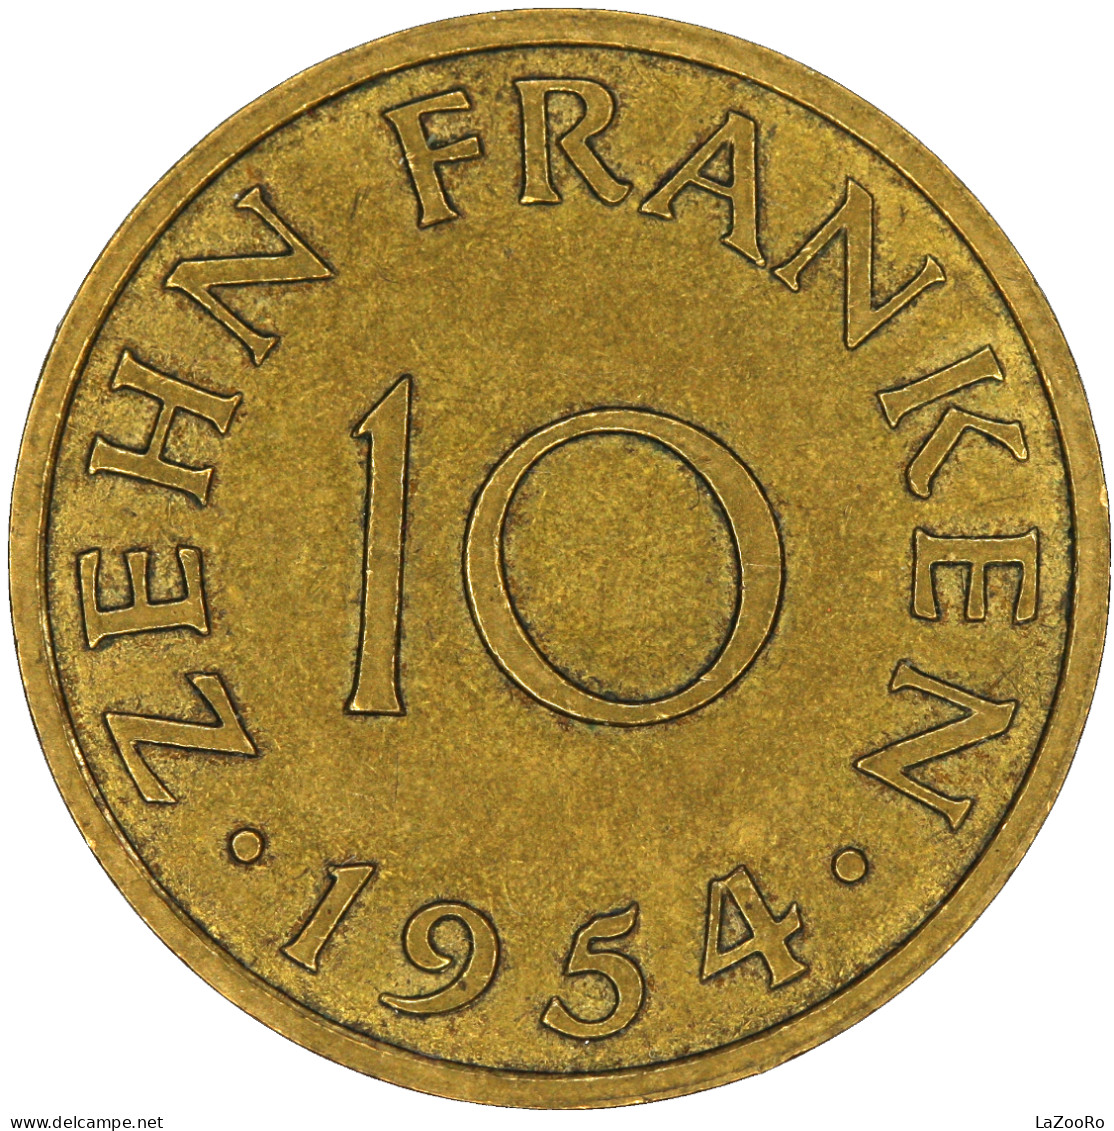 LaZooRo: Germany SAARLAND 10 Franken 1954 UNC - 10 Franchi